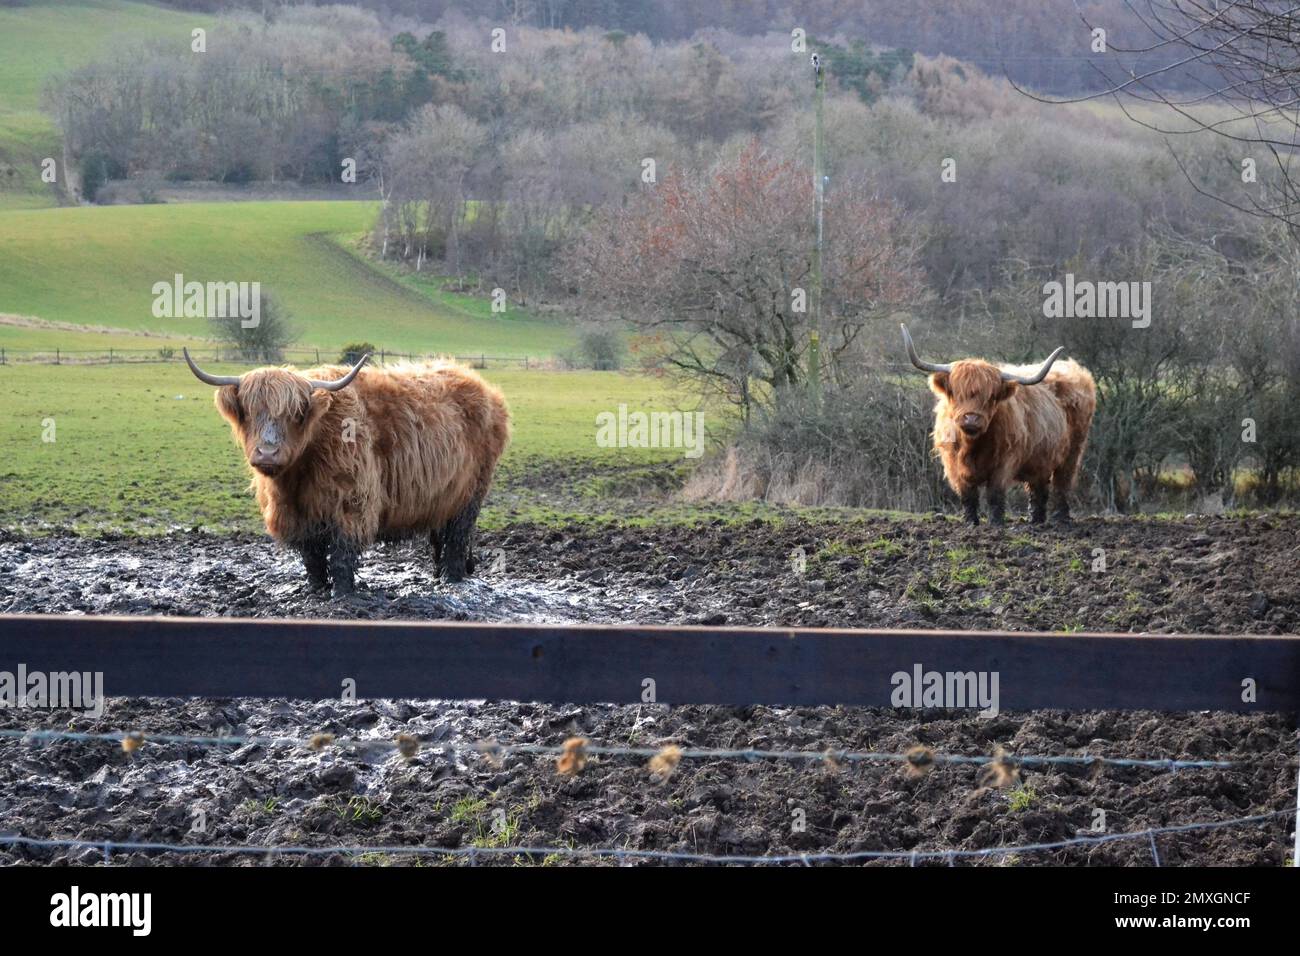 Highland-Rinder stehen auf einem Muddy Farmers Field - Hairy Cow - Long Hair - Strong Horns - Bos Taurus Bovidae Family - Yorkshire - UK Stockfoto